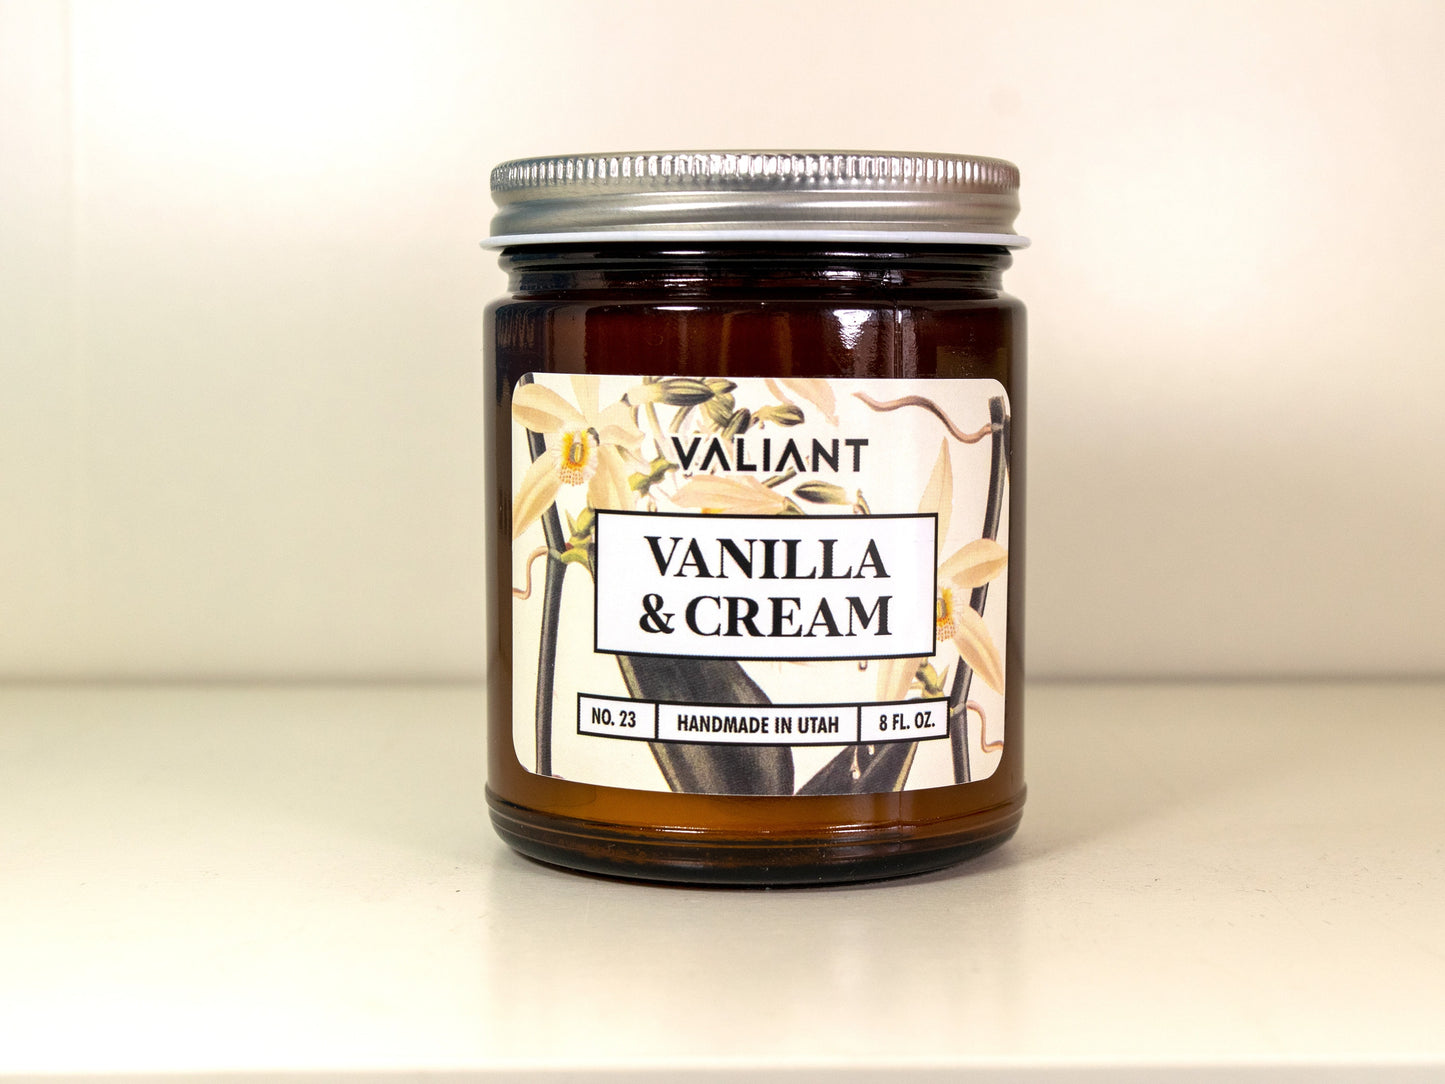 Vanilla & Cream Botanical Candle in Amber Glass